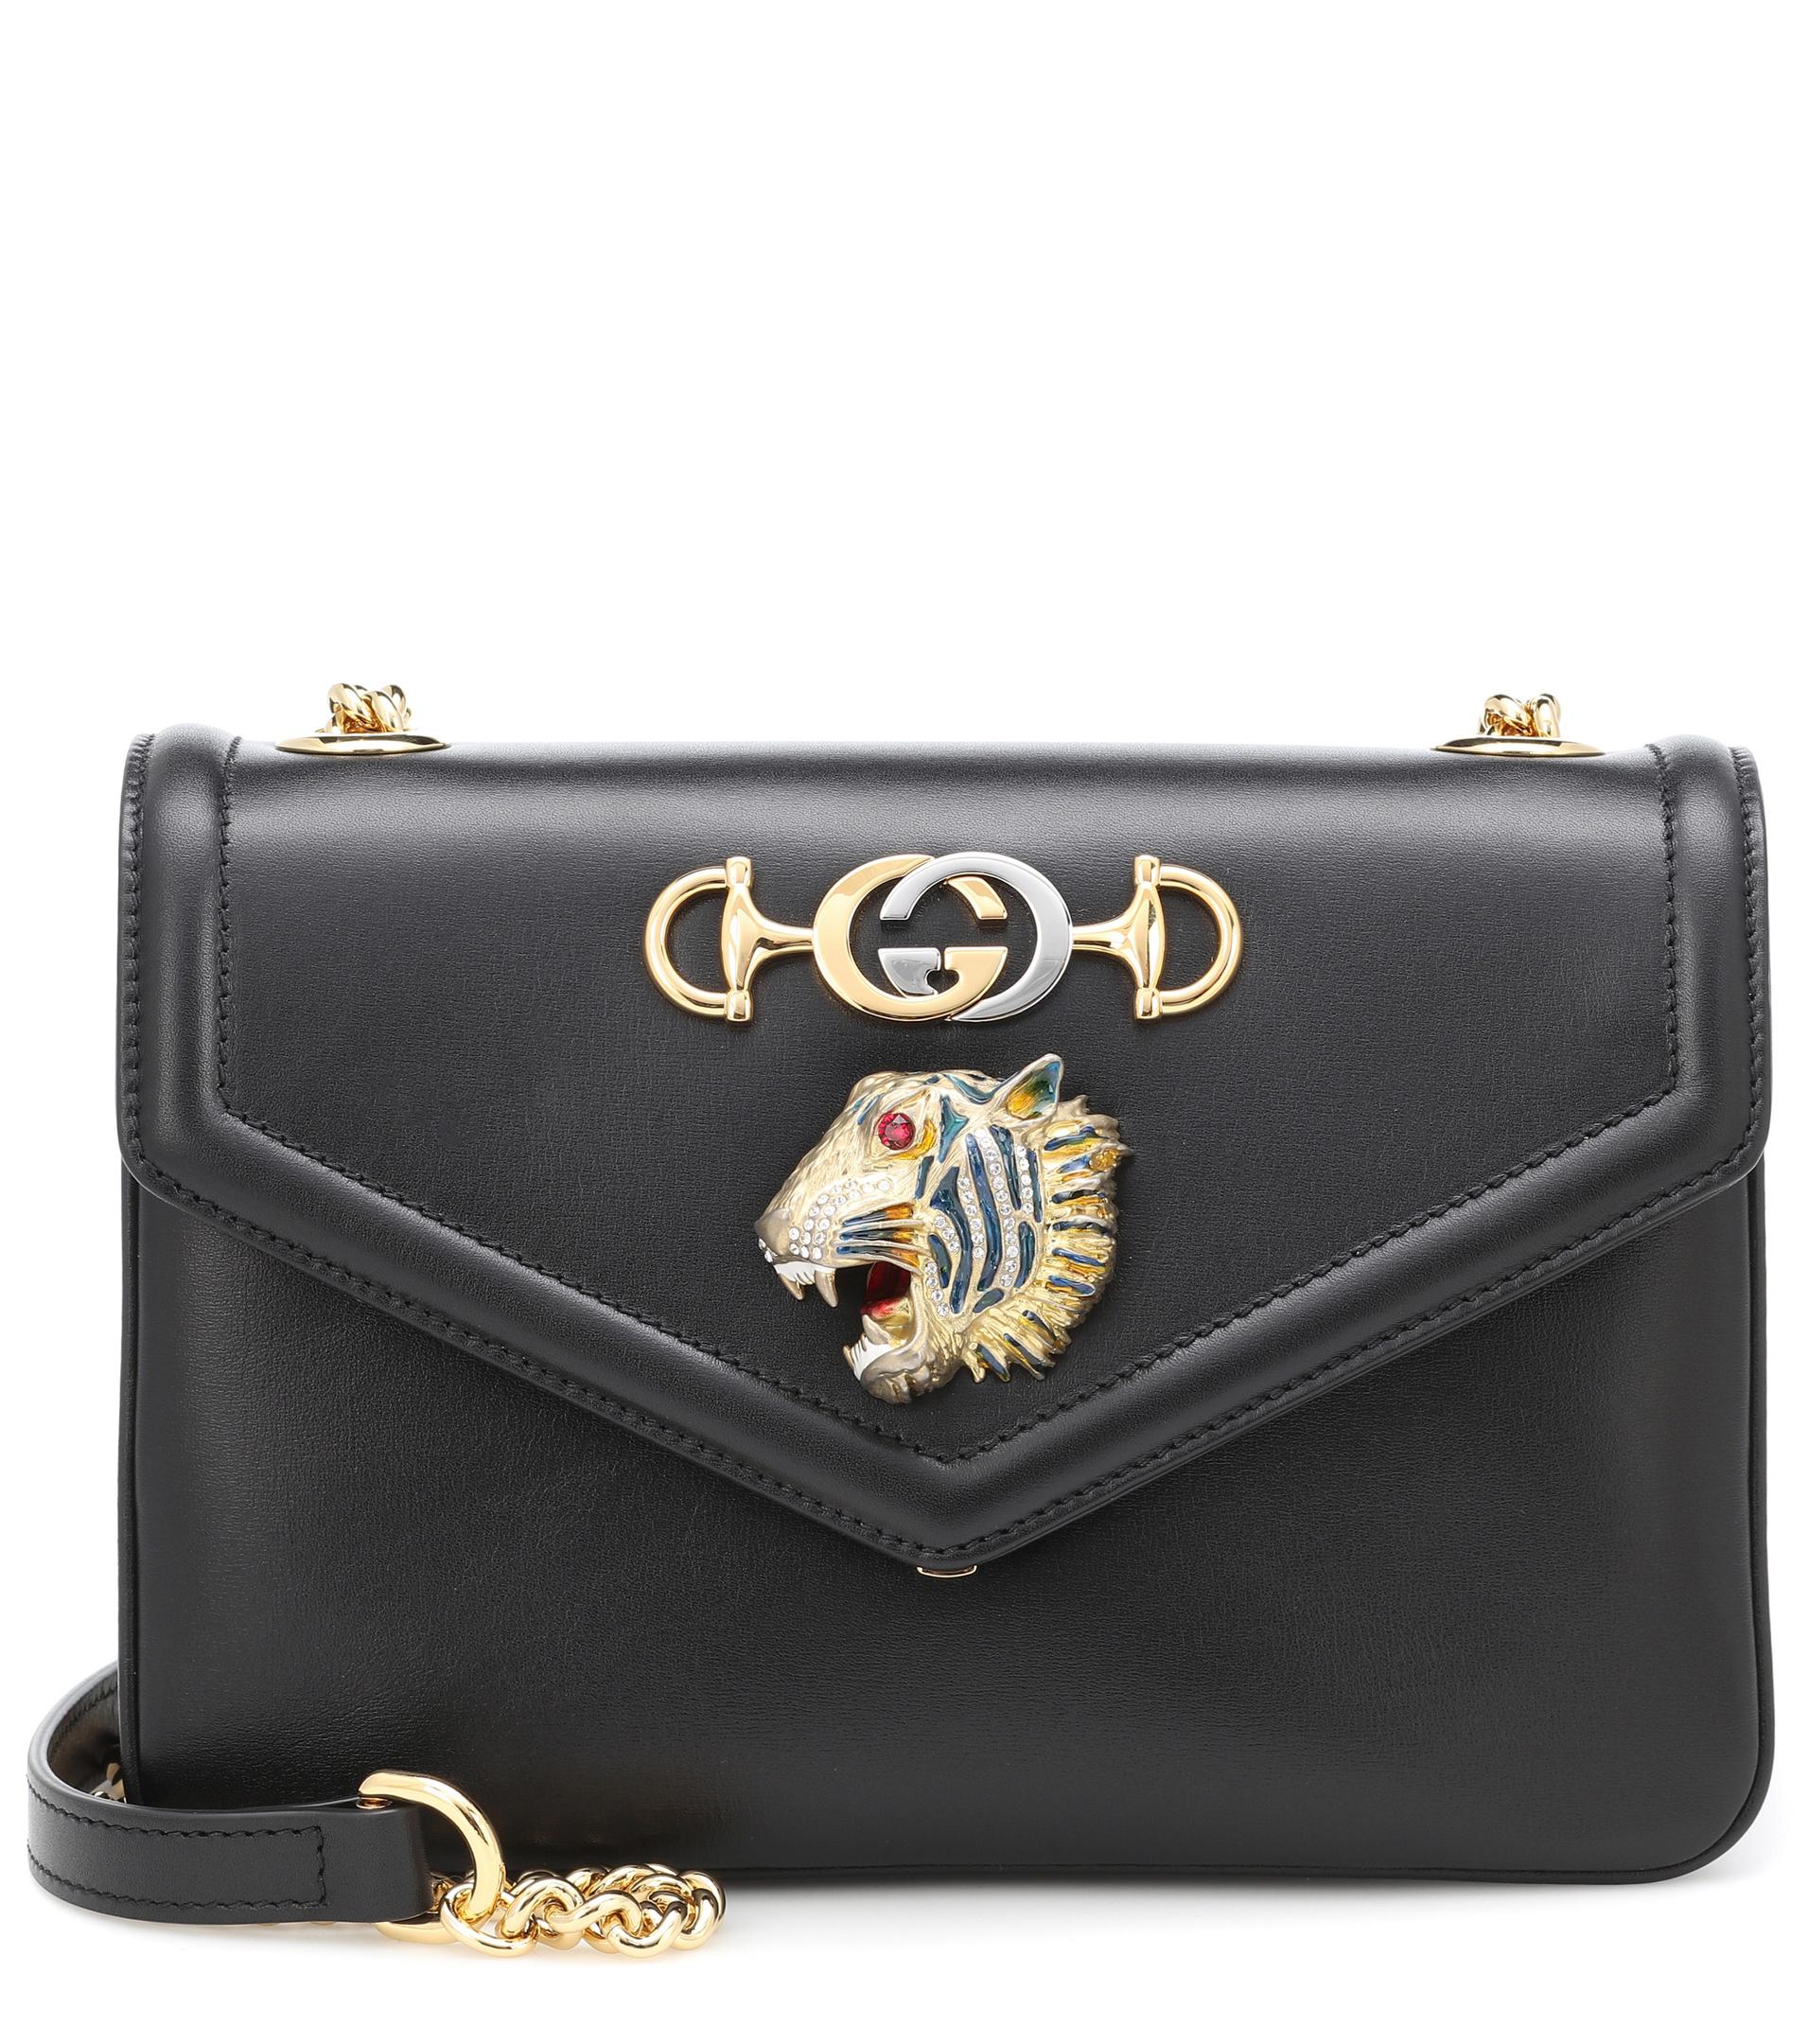 Lyst - Gucci Rajah Small Shoulder Bag in Black